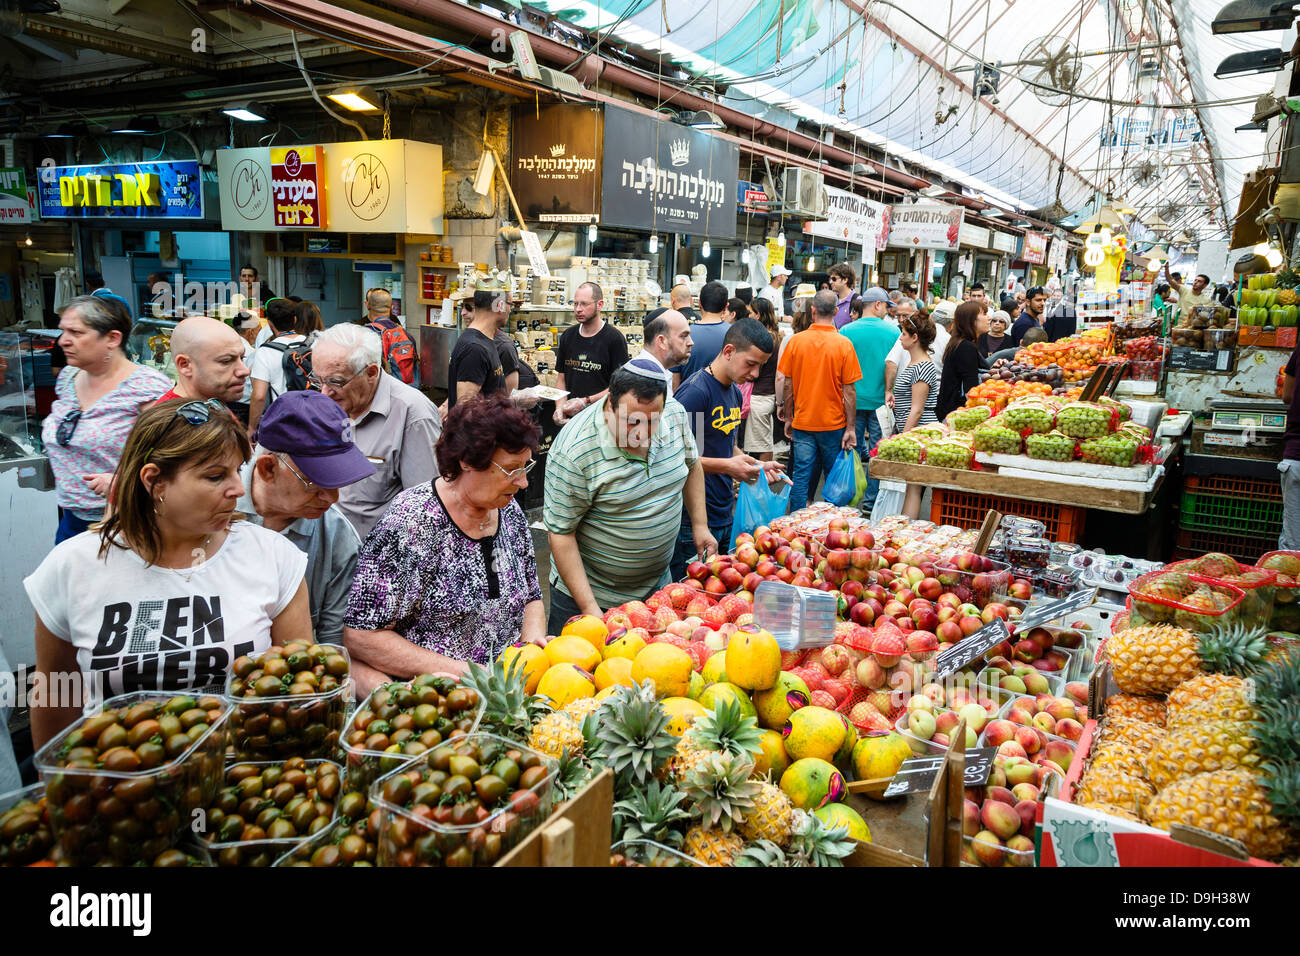 Les étals de fruits et légumes au marché Mahane Yehuda, Jérusalem, Israël. Banque D'Images